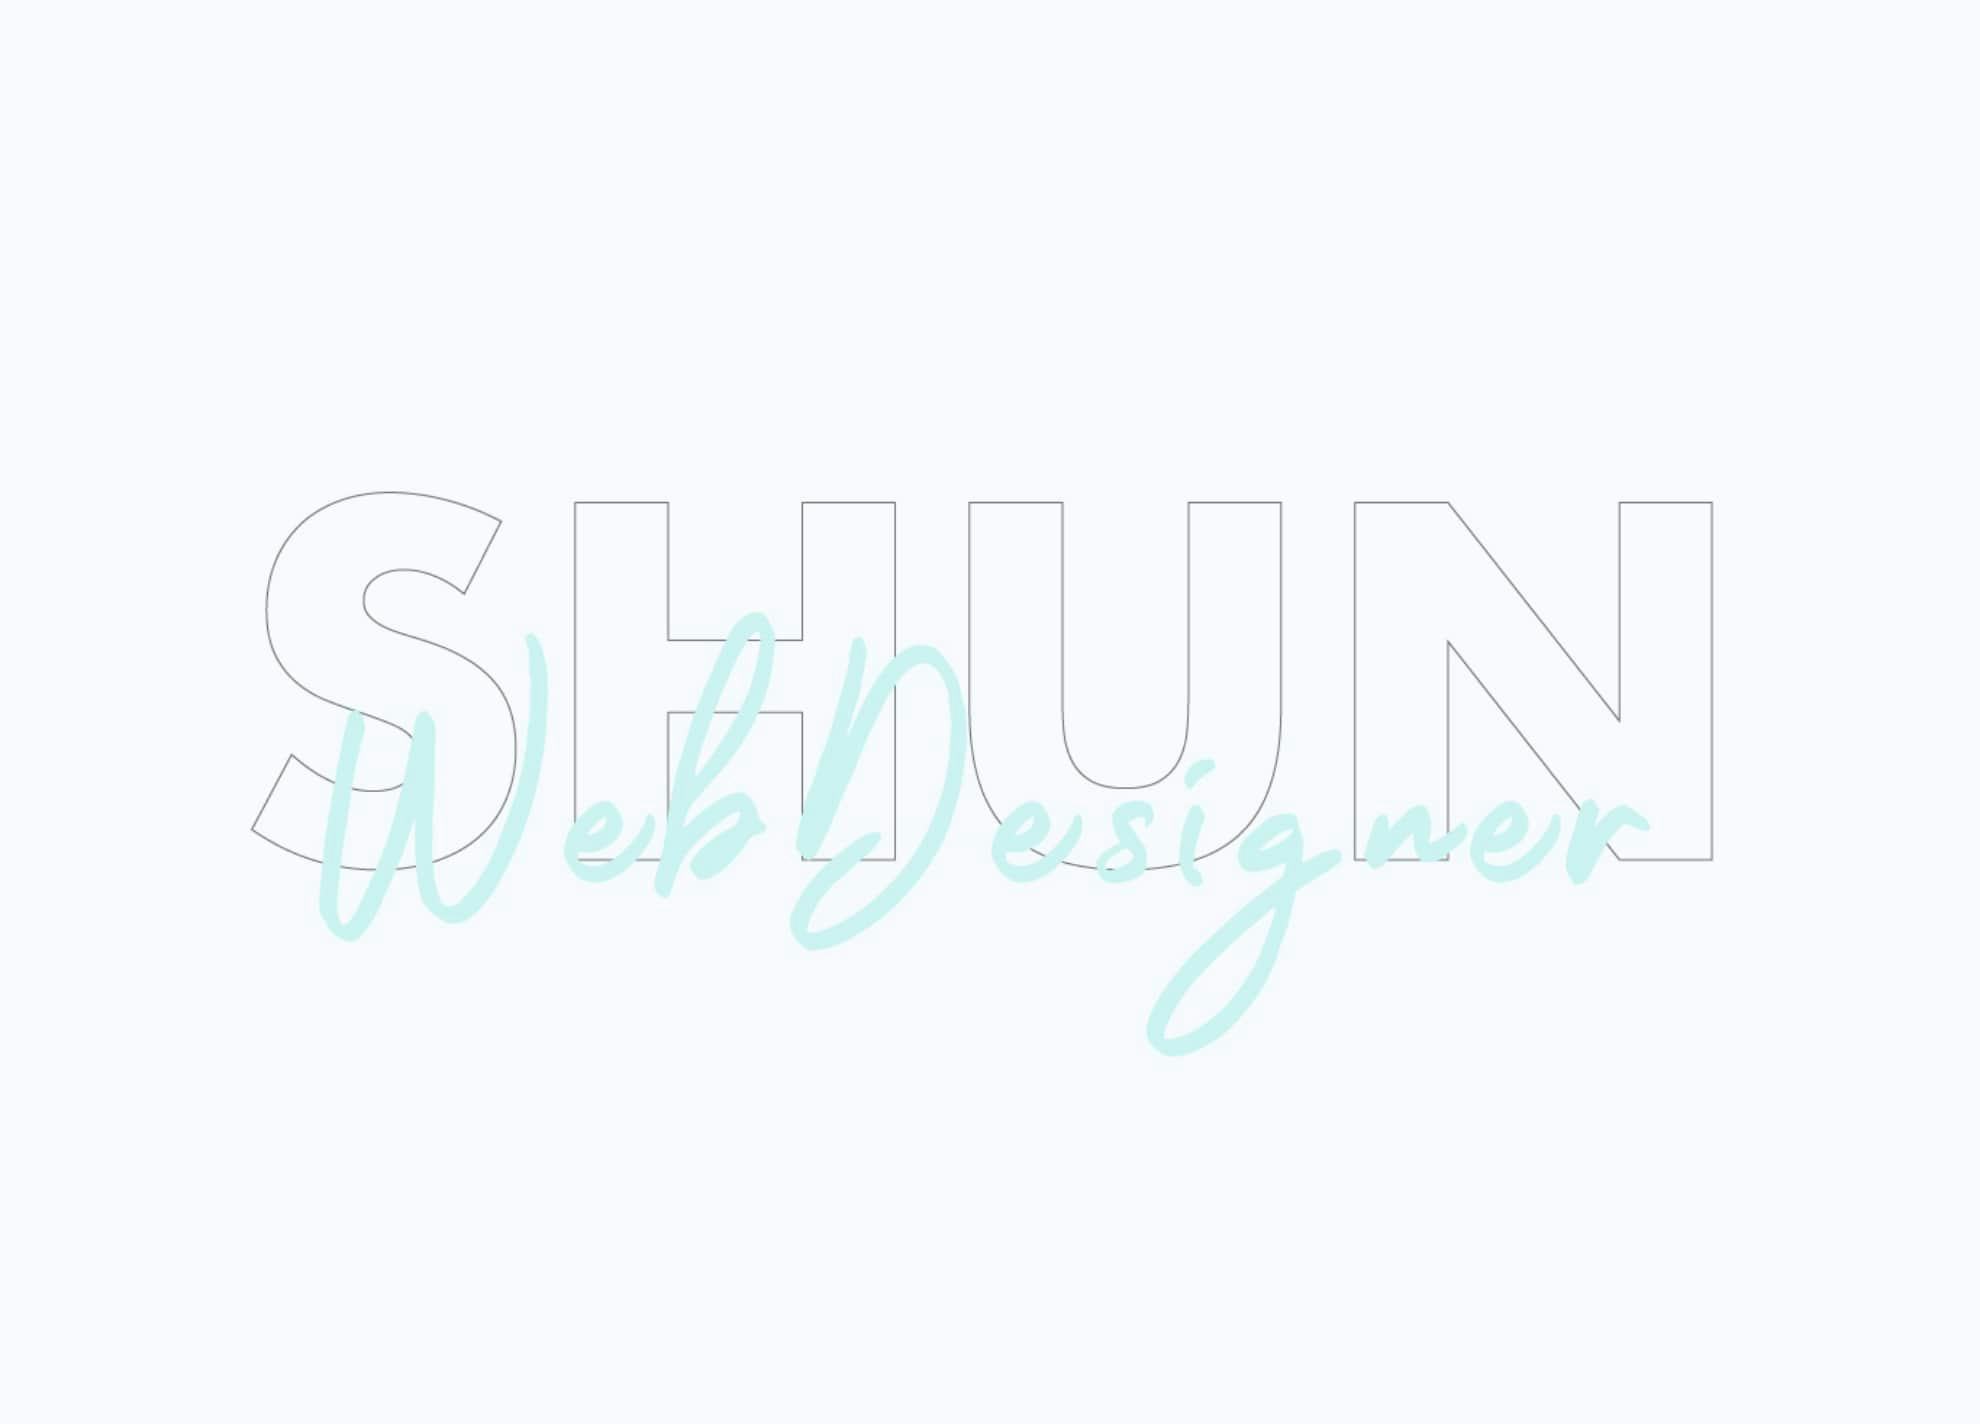 Shun web design